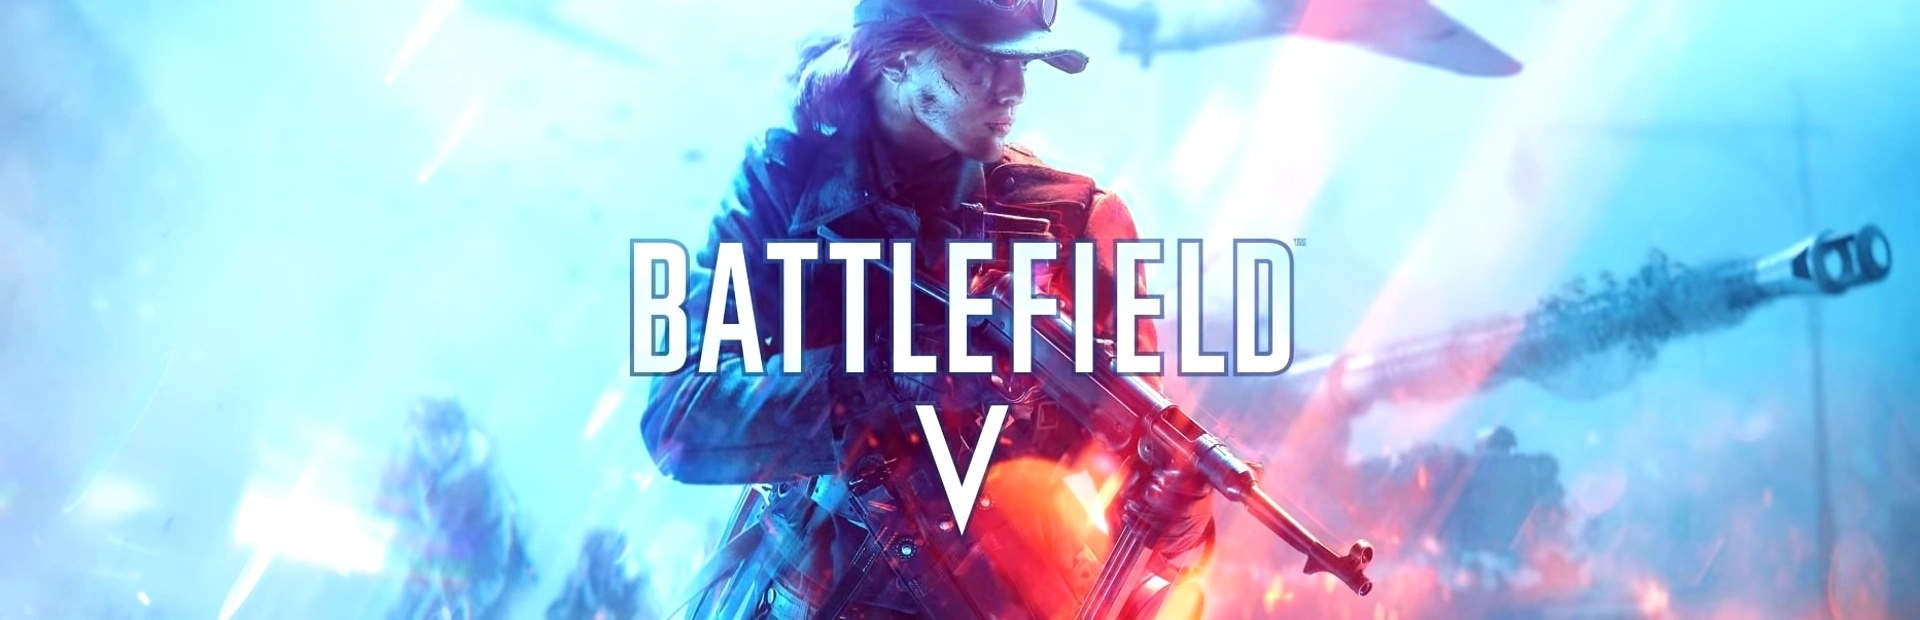 Battlefield V.banner3